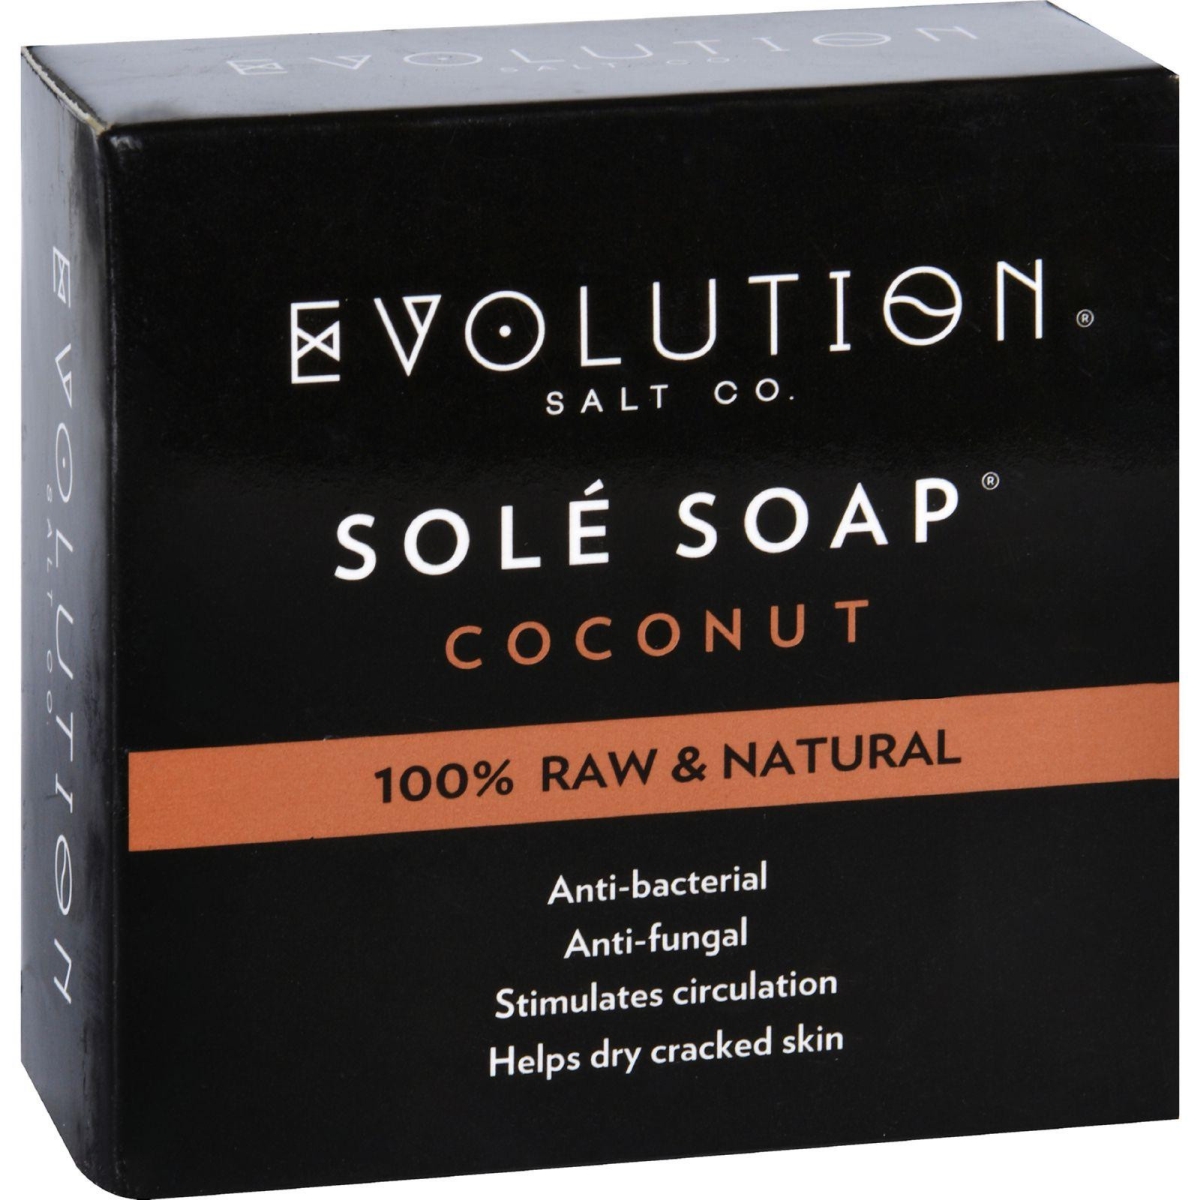 Hg1702299 4.5 Oz Sole Bath Soap, Coconut